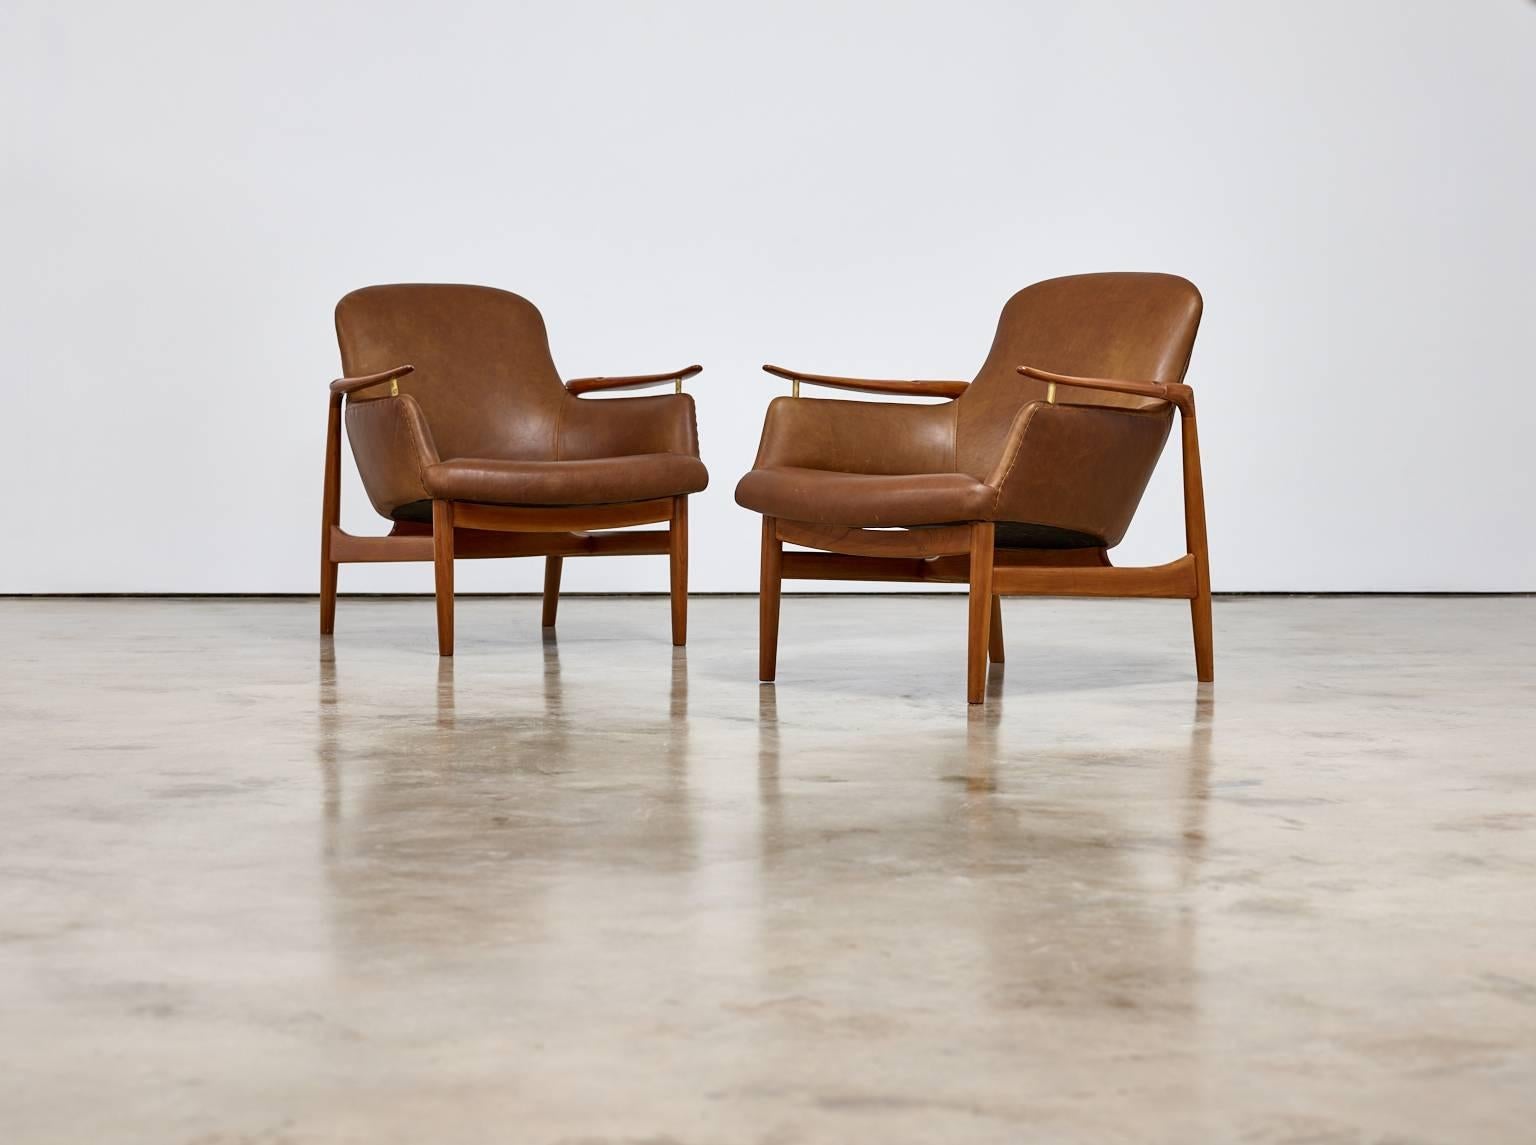 Pair of Finn Juhl armchairs, model NV53,

Copenhagen, Denmark, circa 1950s.
Cabinetmaker Niels Vodder.

Teak, leather, brass.
Each: 73.1 x 72 x 81.4 cm 
28 3/4 x 28 3/8 x 32 in.

Each underside branded and impressed with "CABINETMAKER